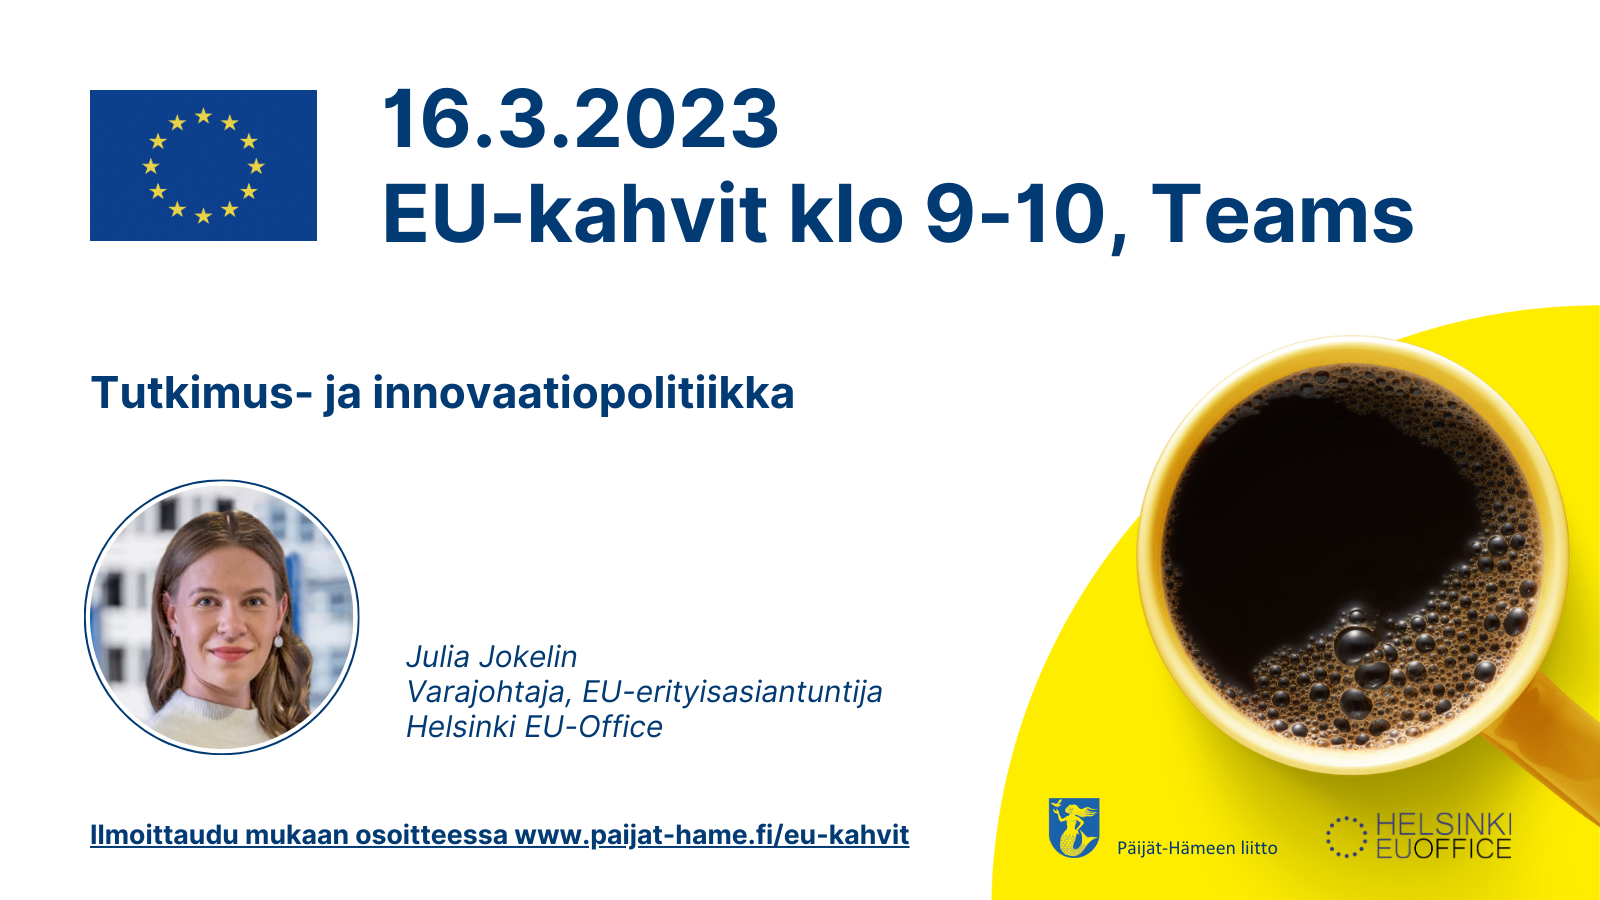 EU-kahvit 16.3.2023 klo 9-10, Teams